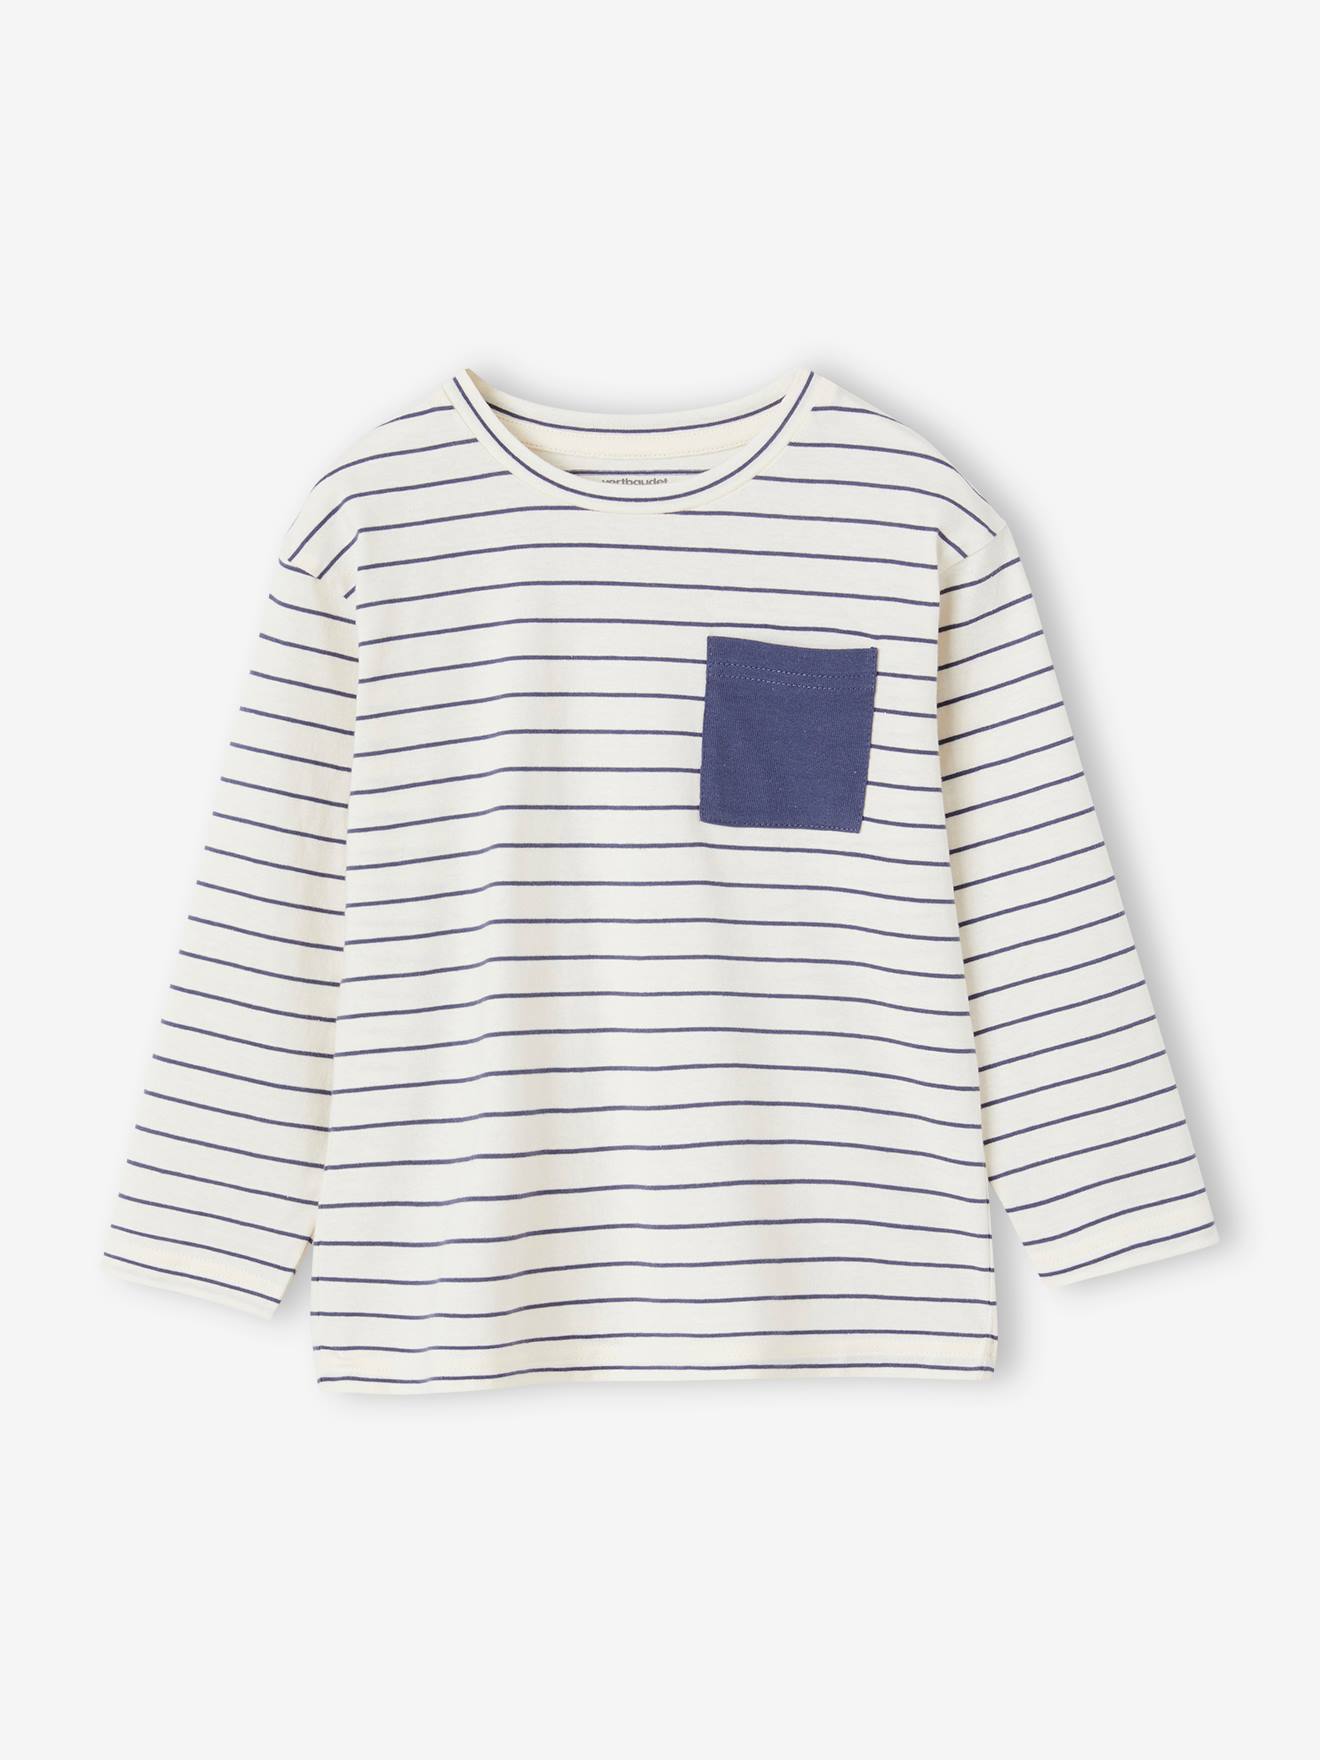 Striped T-Shirt for Boys slate blue